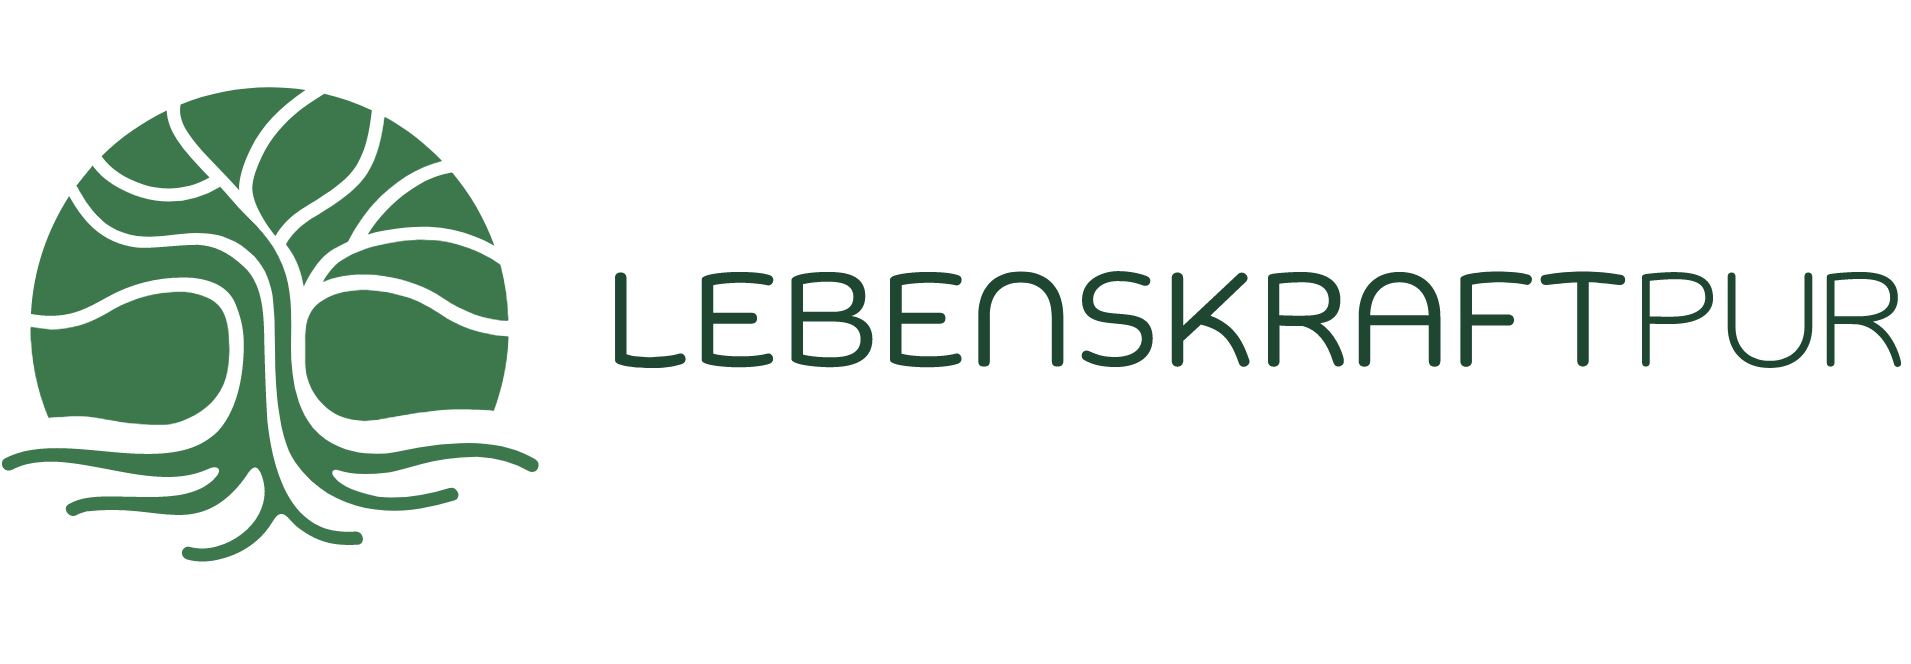 Lebenskraftpur GmbH logo